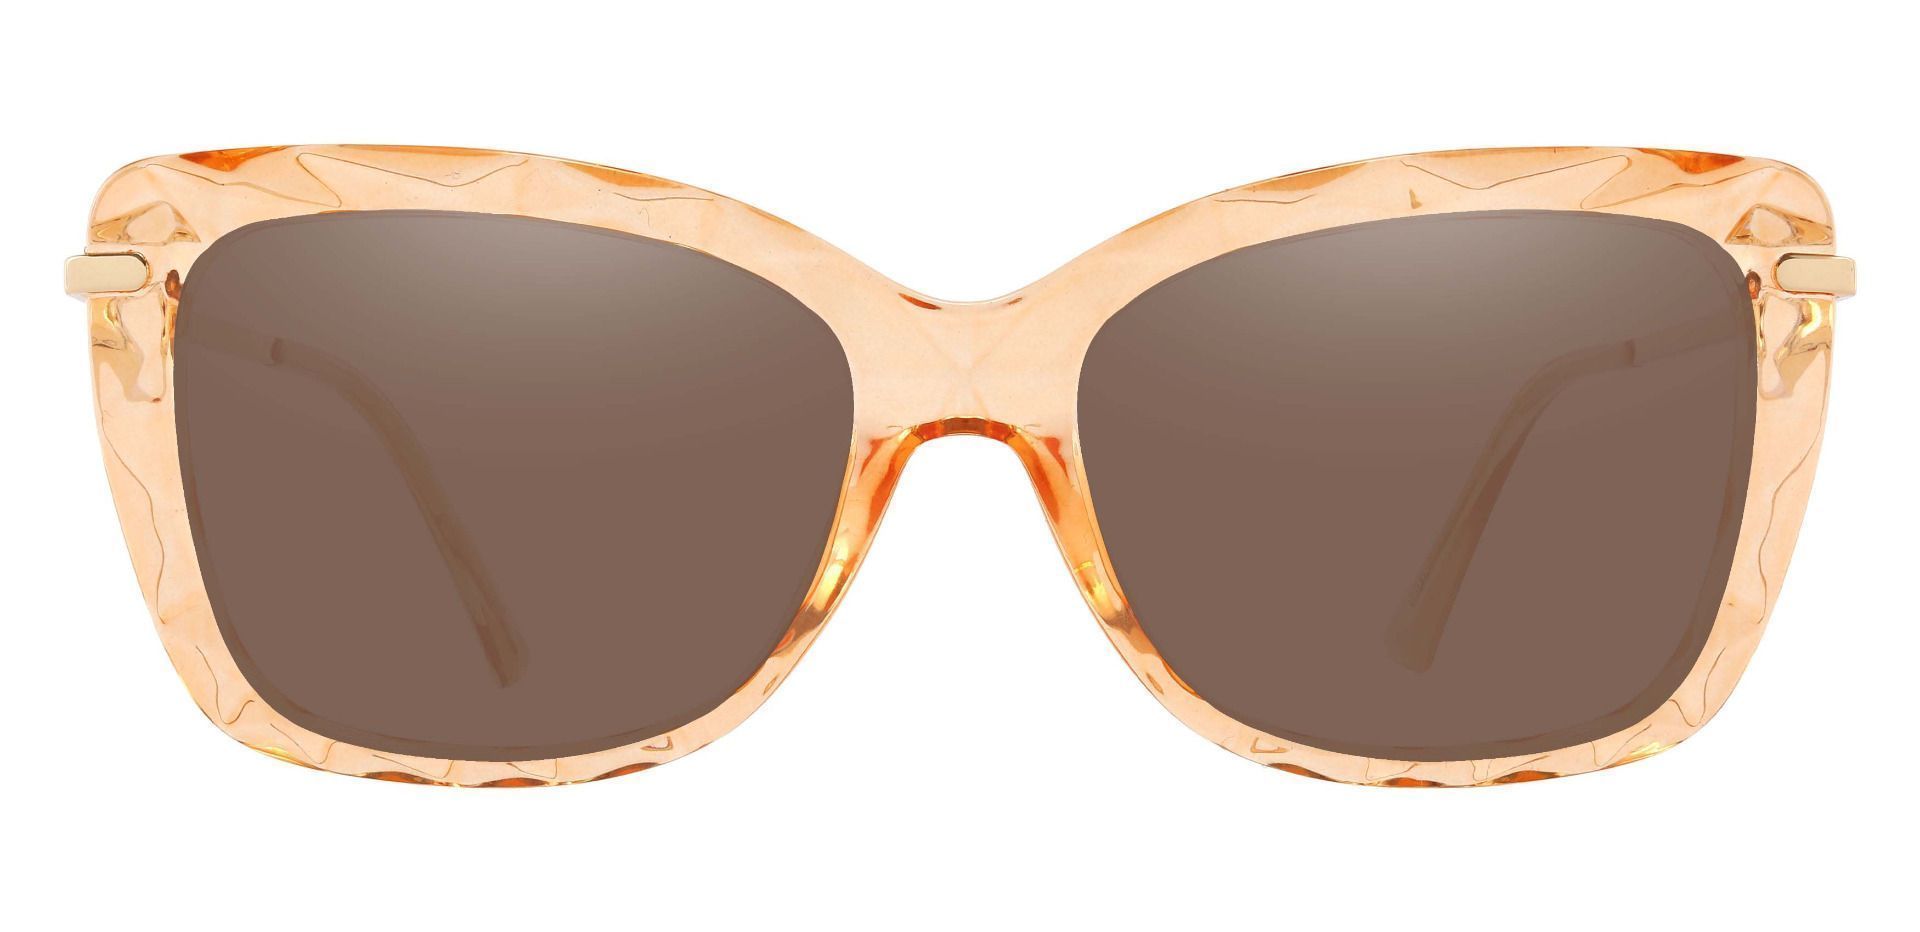 Shoshanna Rectangle Prescription Sunglasses - Brown Frame With Brown Lenses